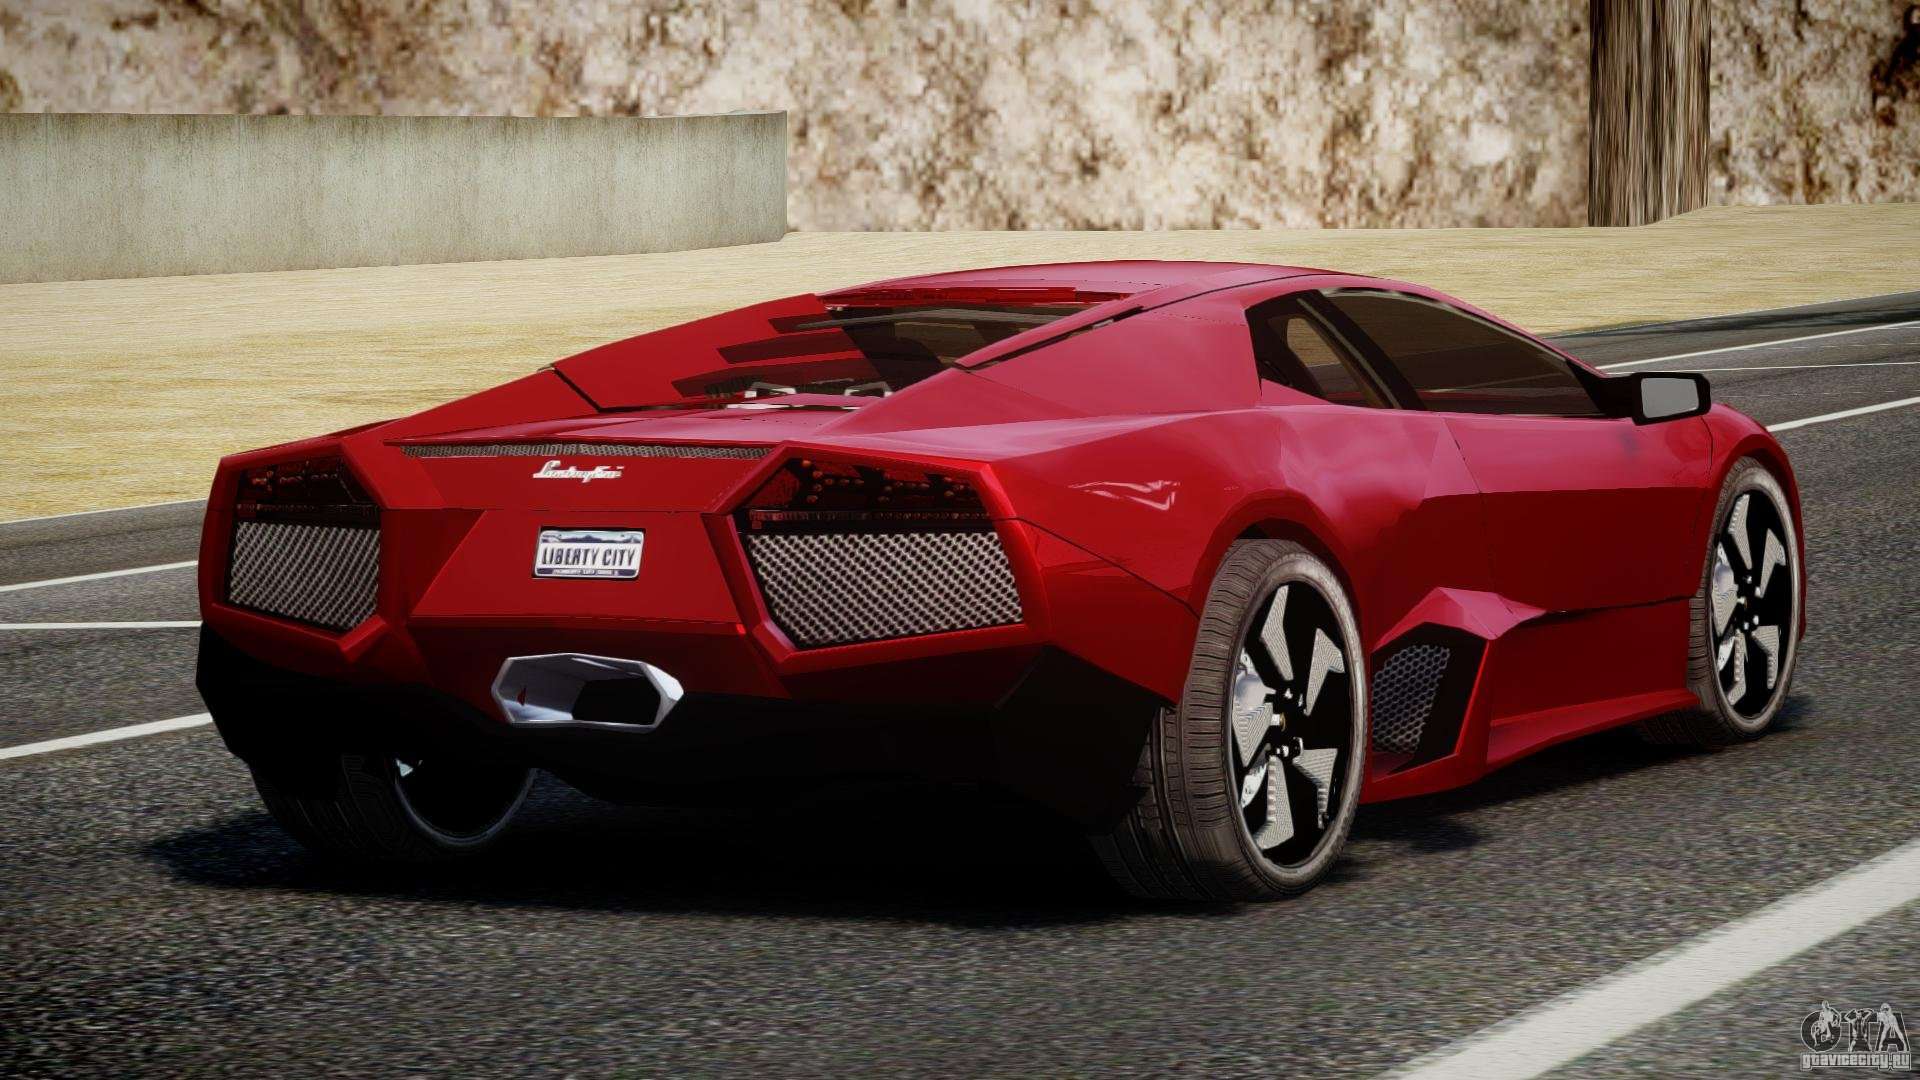 Lamborghini Reventon for GTA 4